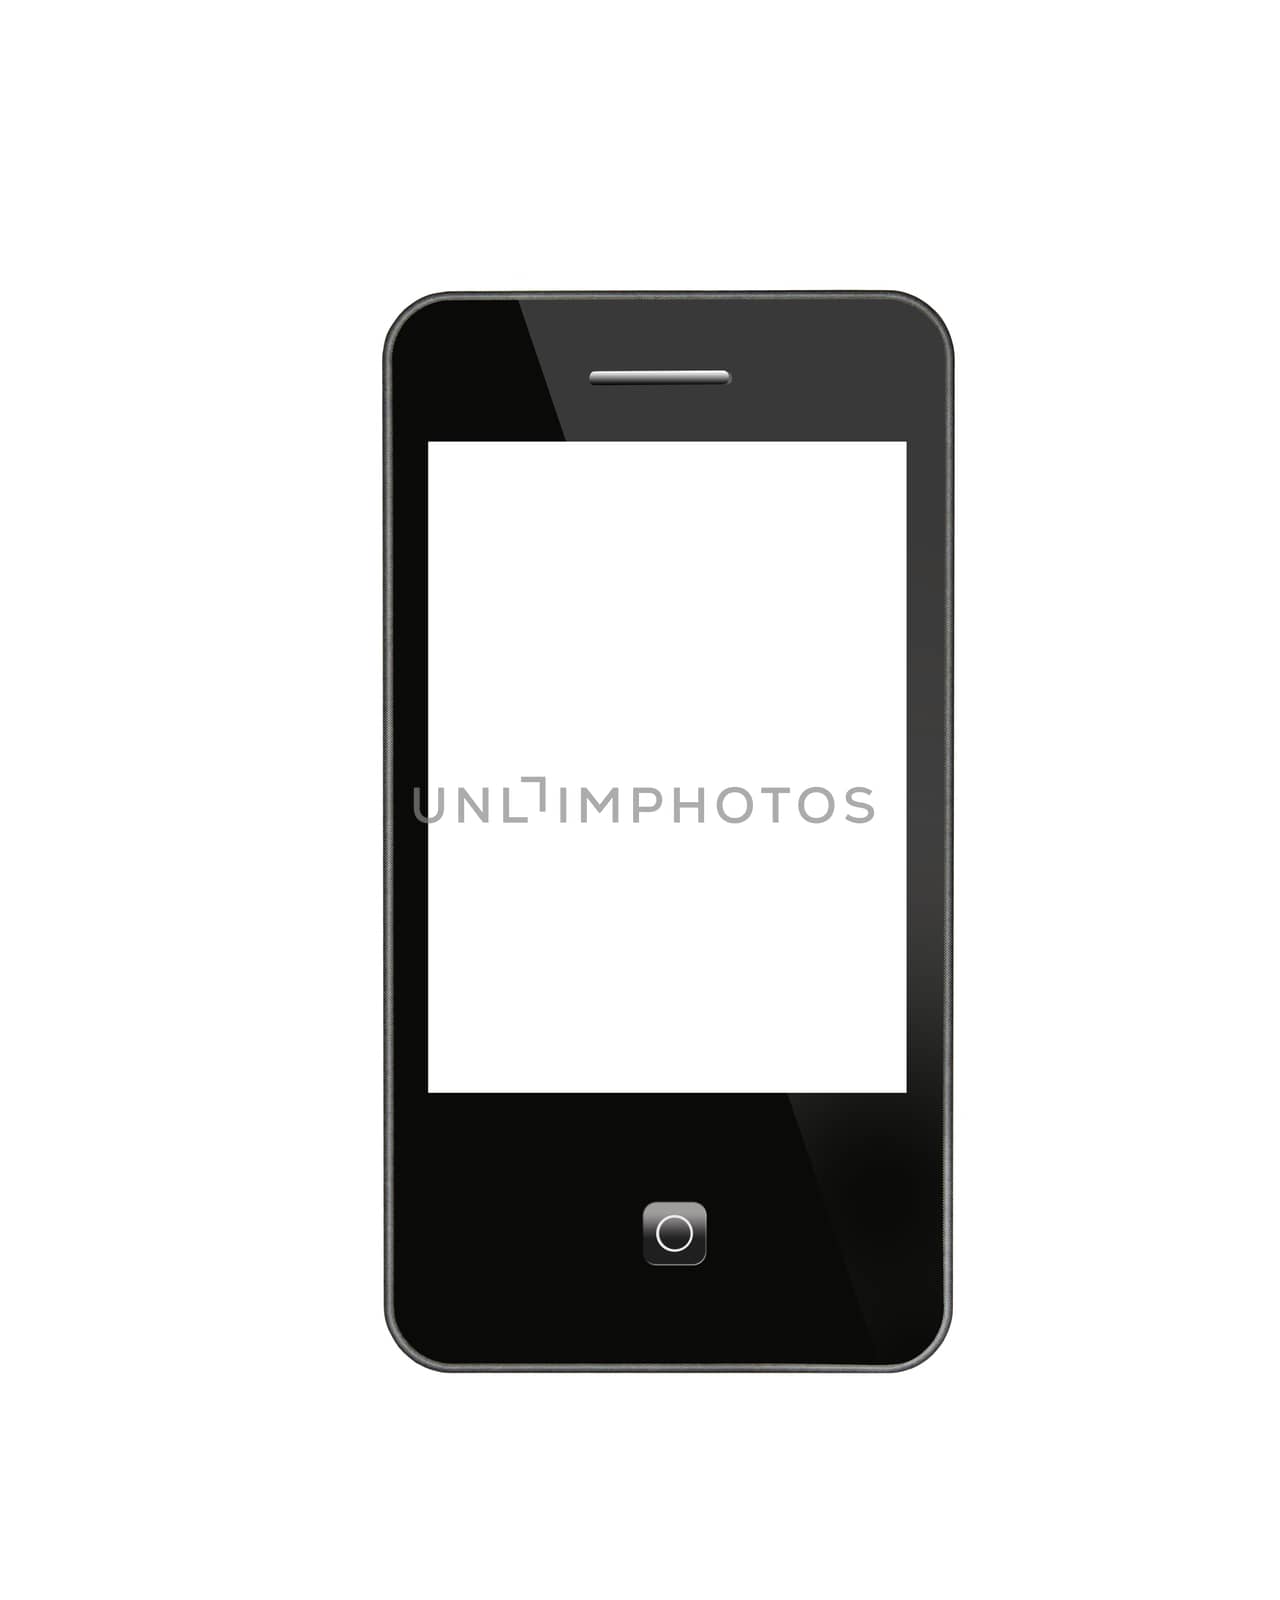 black modern mobile phone by alexmak